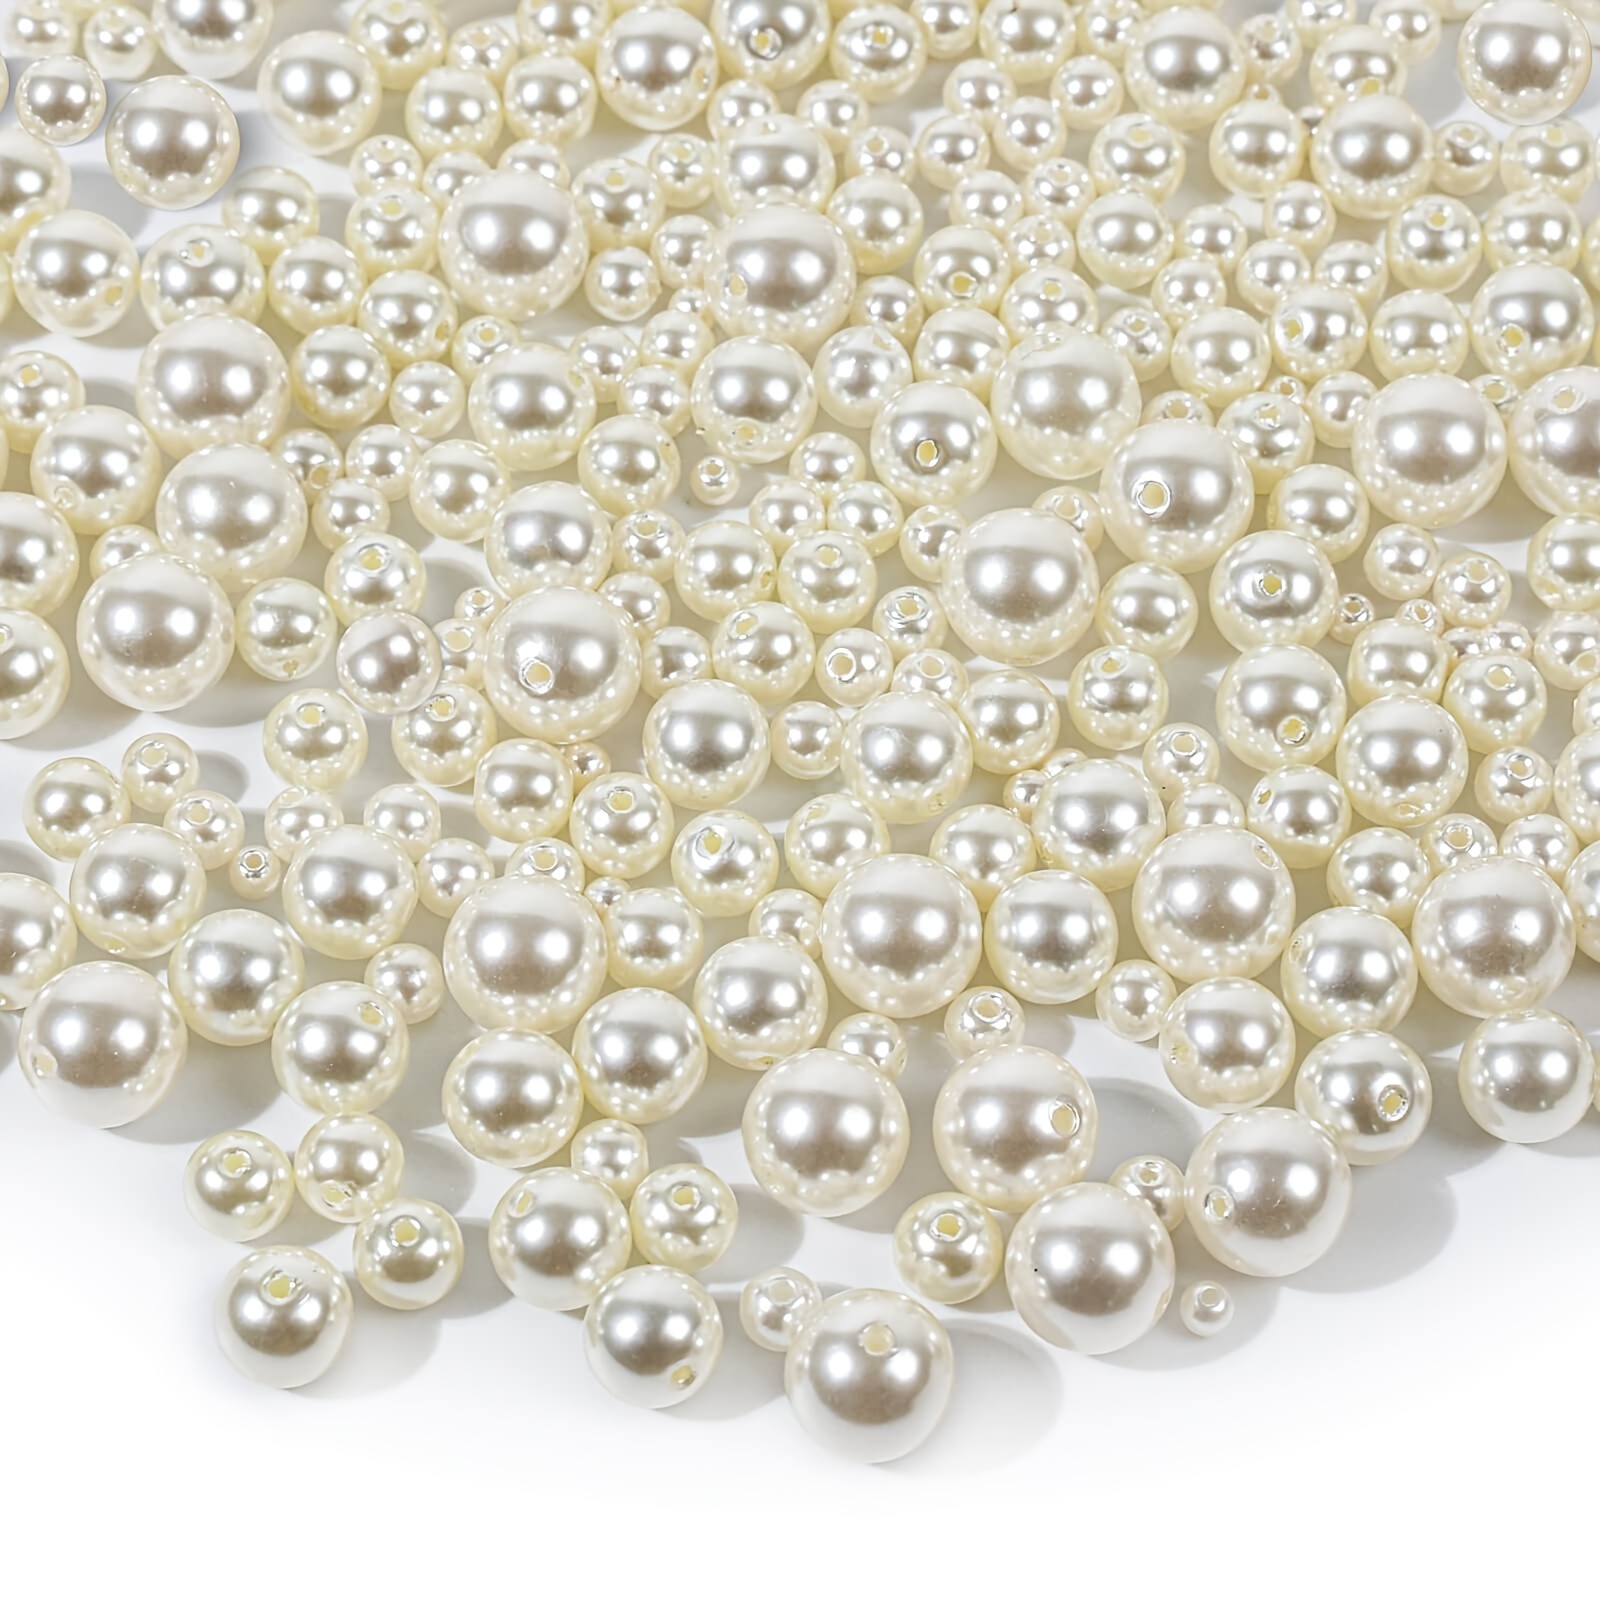 Craft Pearls